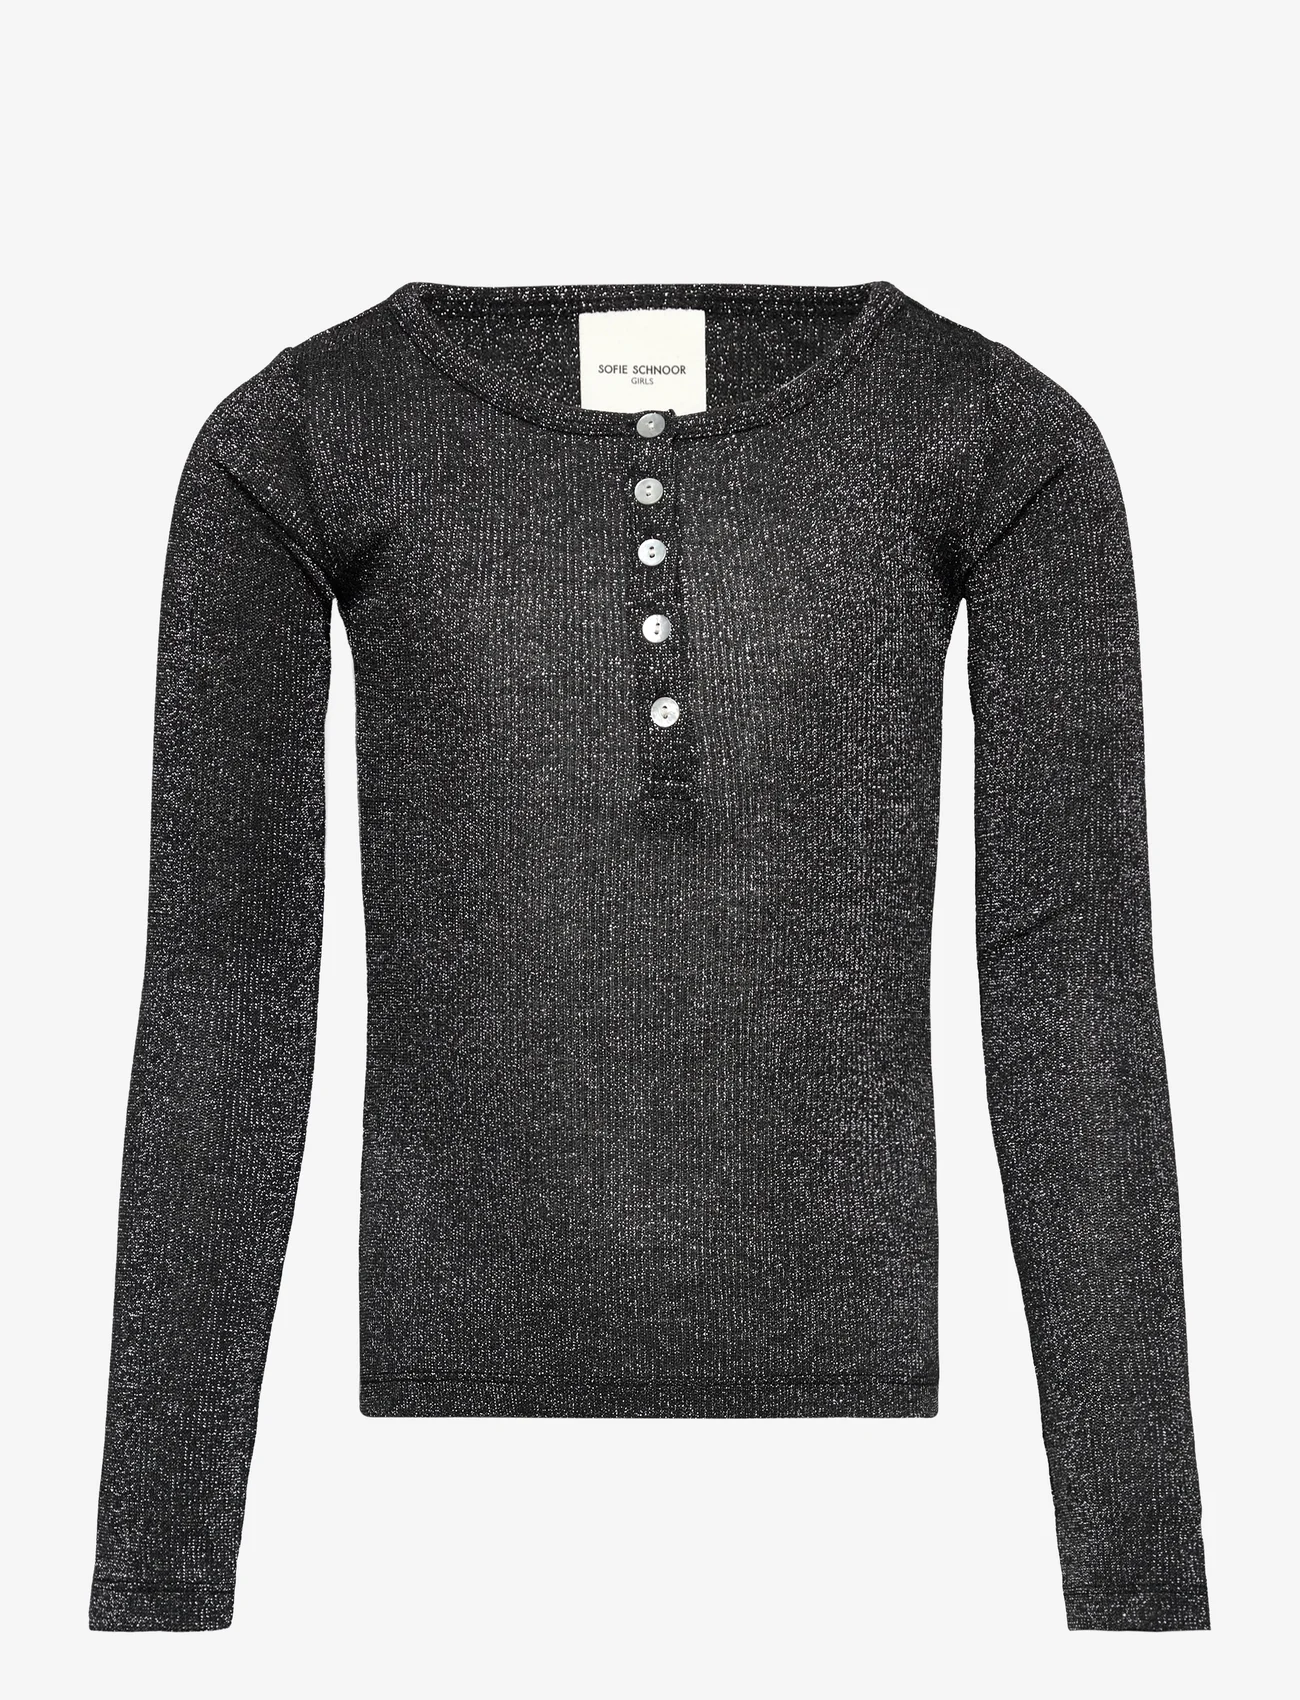 Sofie Schnoor Young - T-shirt long-slv - marškinėliai ilgomis rankovėmis - black glitter - 0